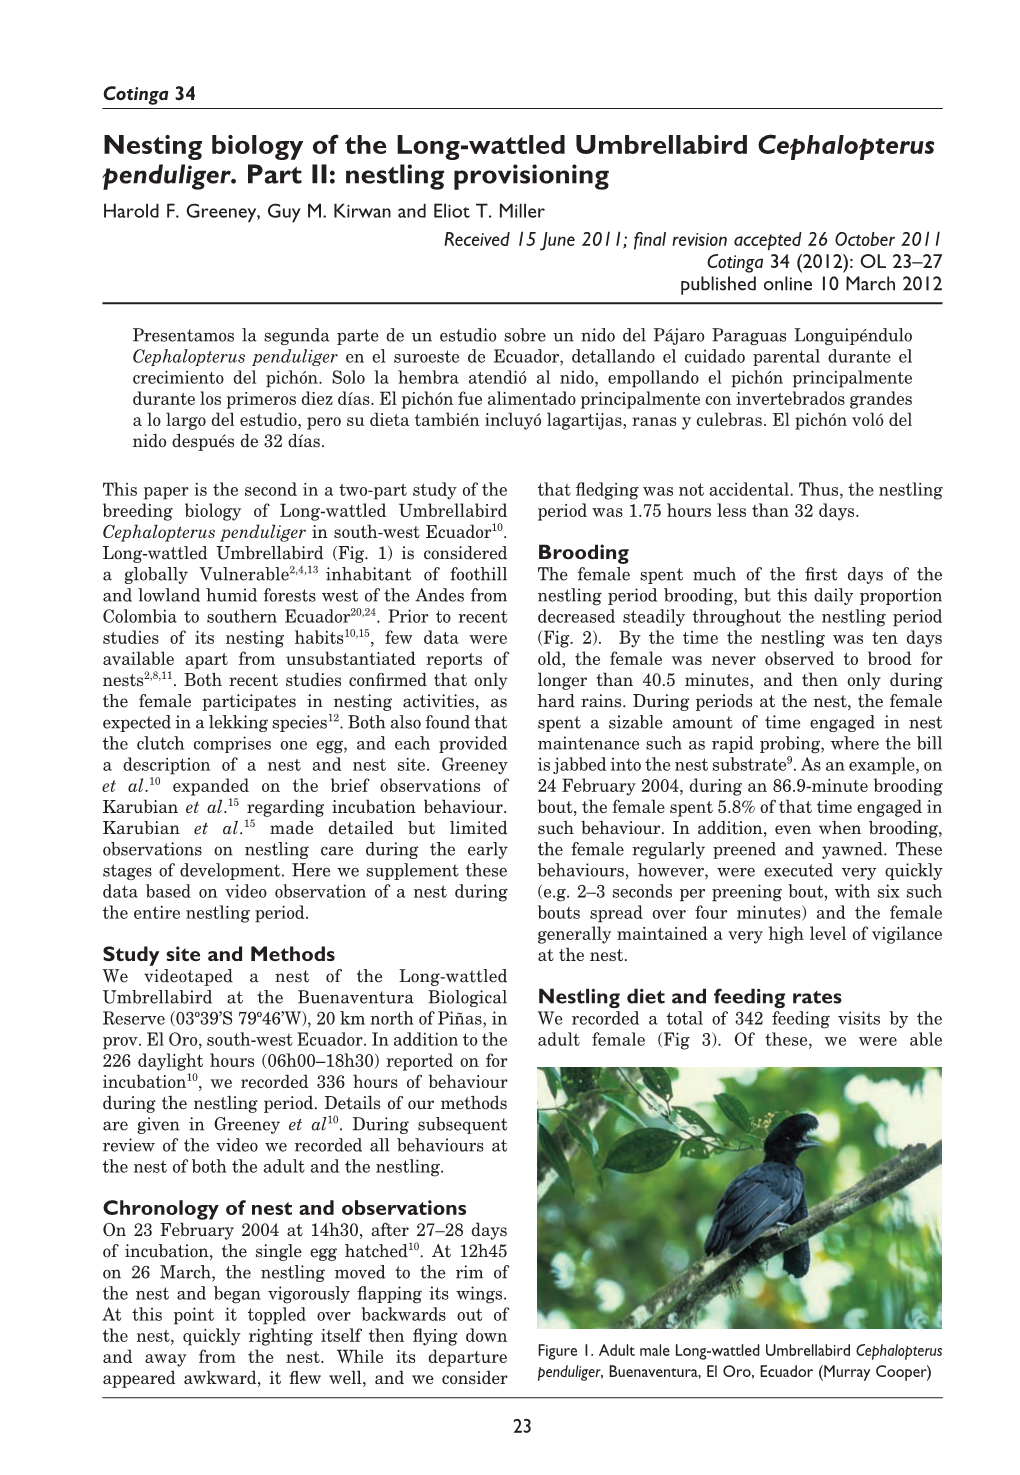 Nesting Biology of the Long-Wattled Umbrellabird Cephalopterus Penduliger